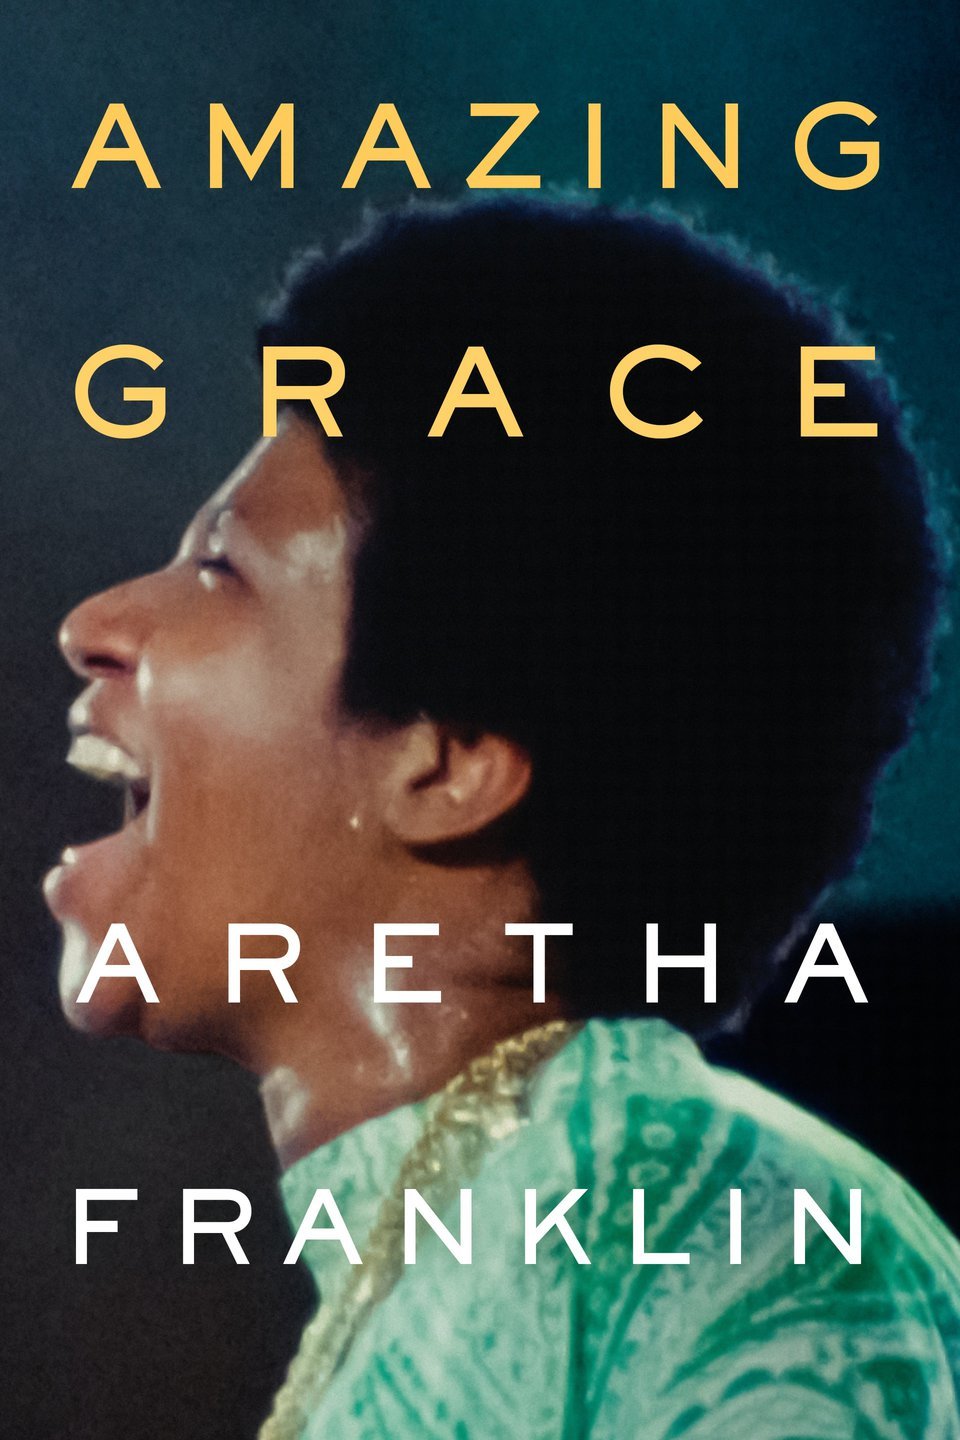 Aretha Franklin Doc, "Amazing Grace"